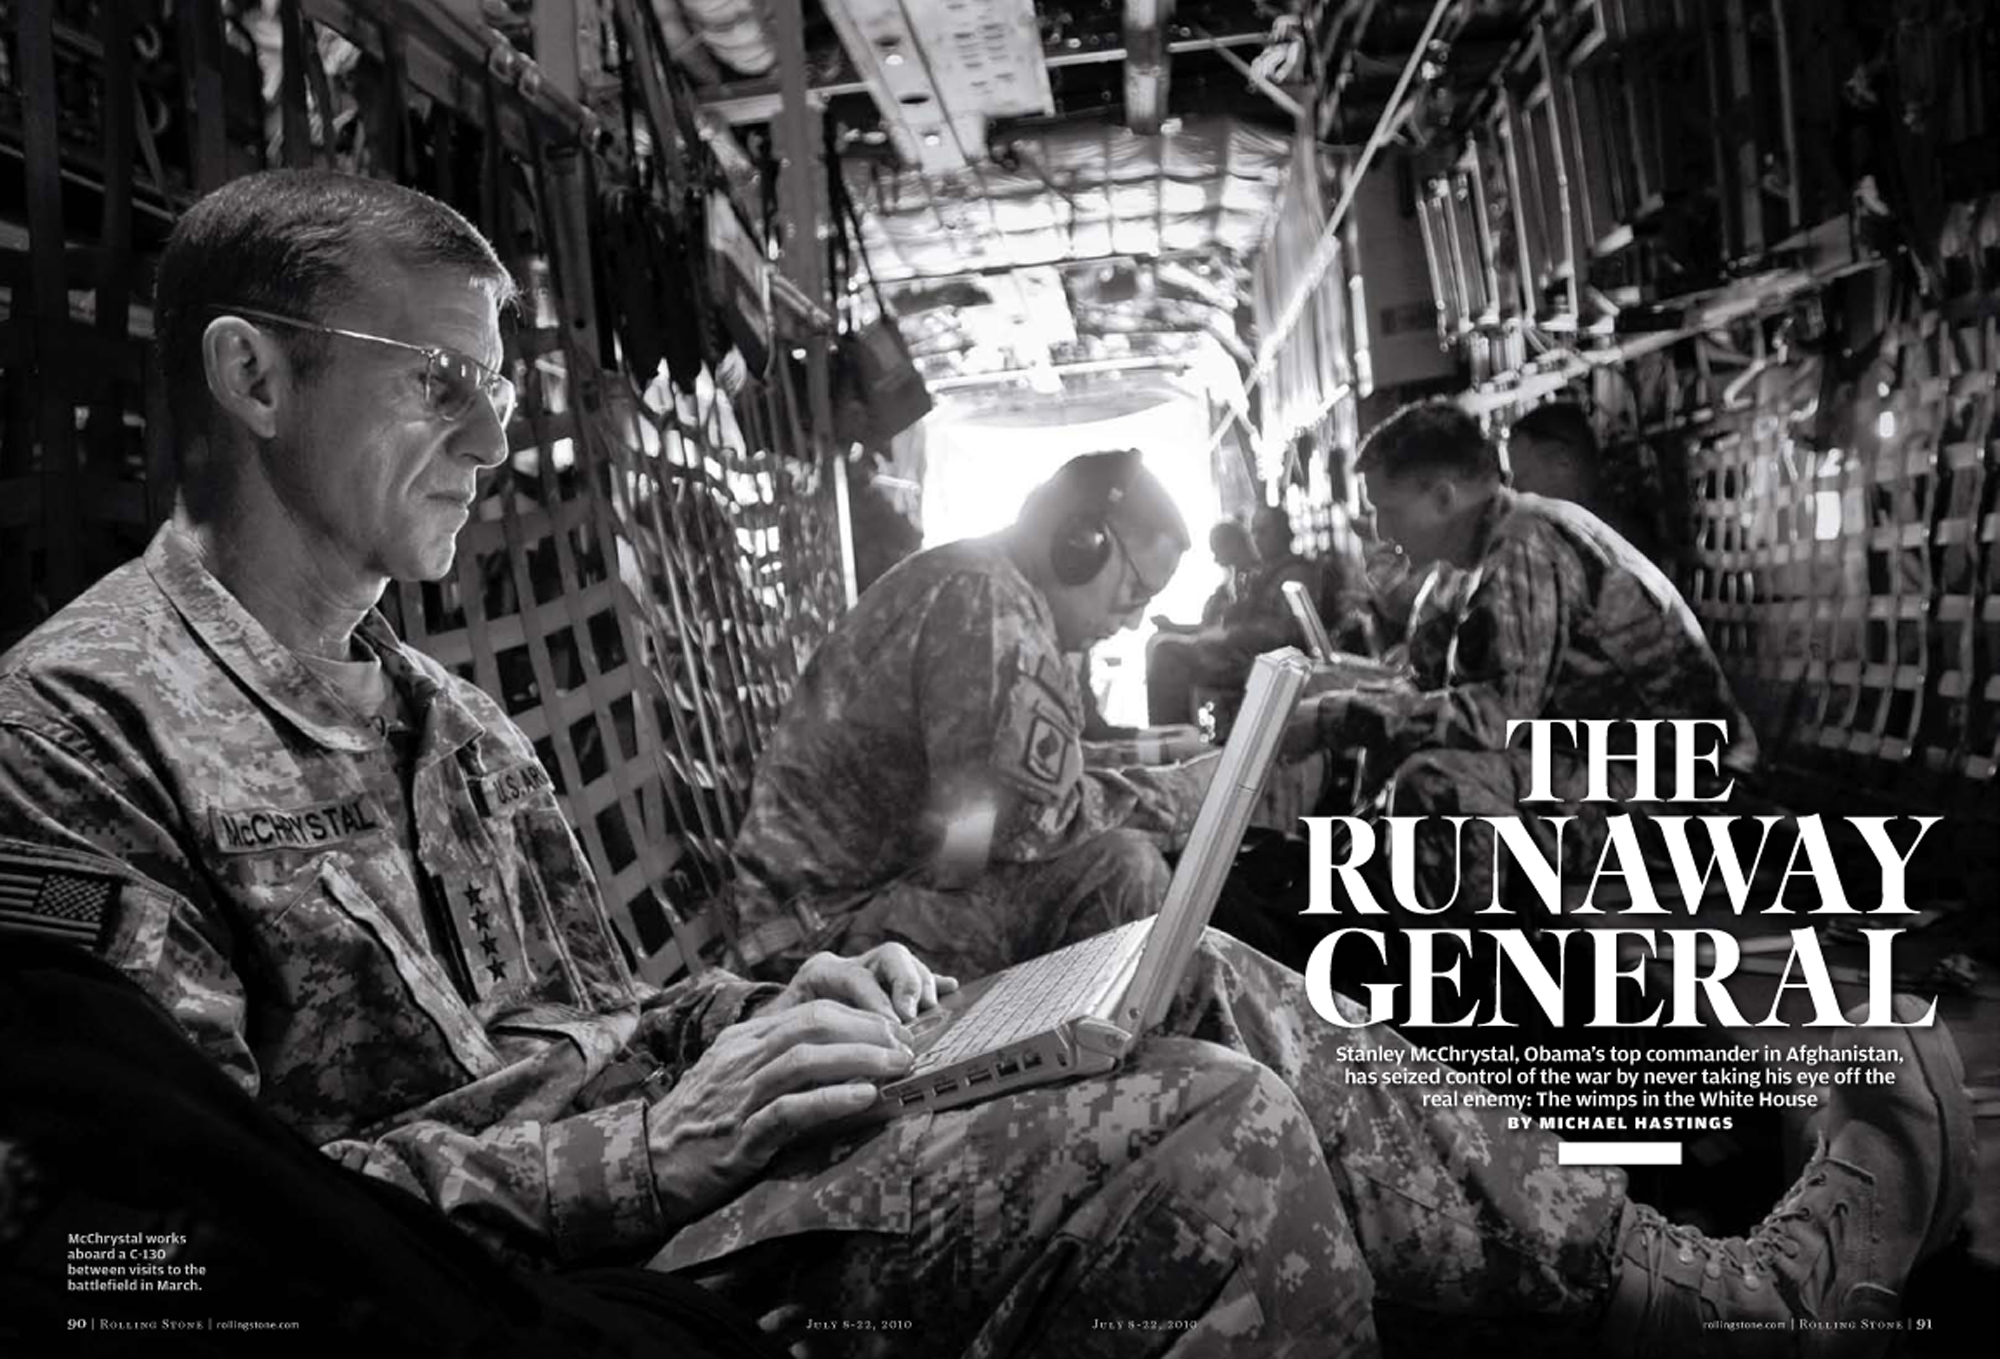 Stanley McChrystal, Rolling Stone, Barack Obama, Afghanistan